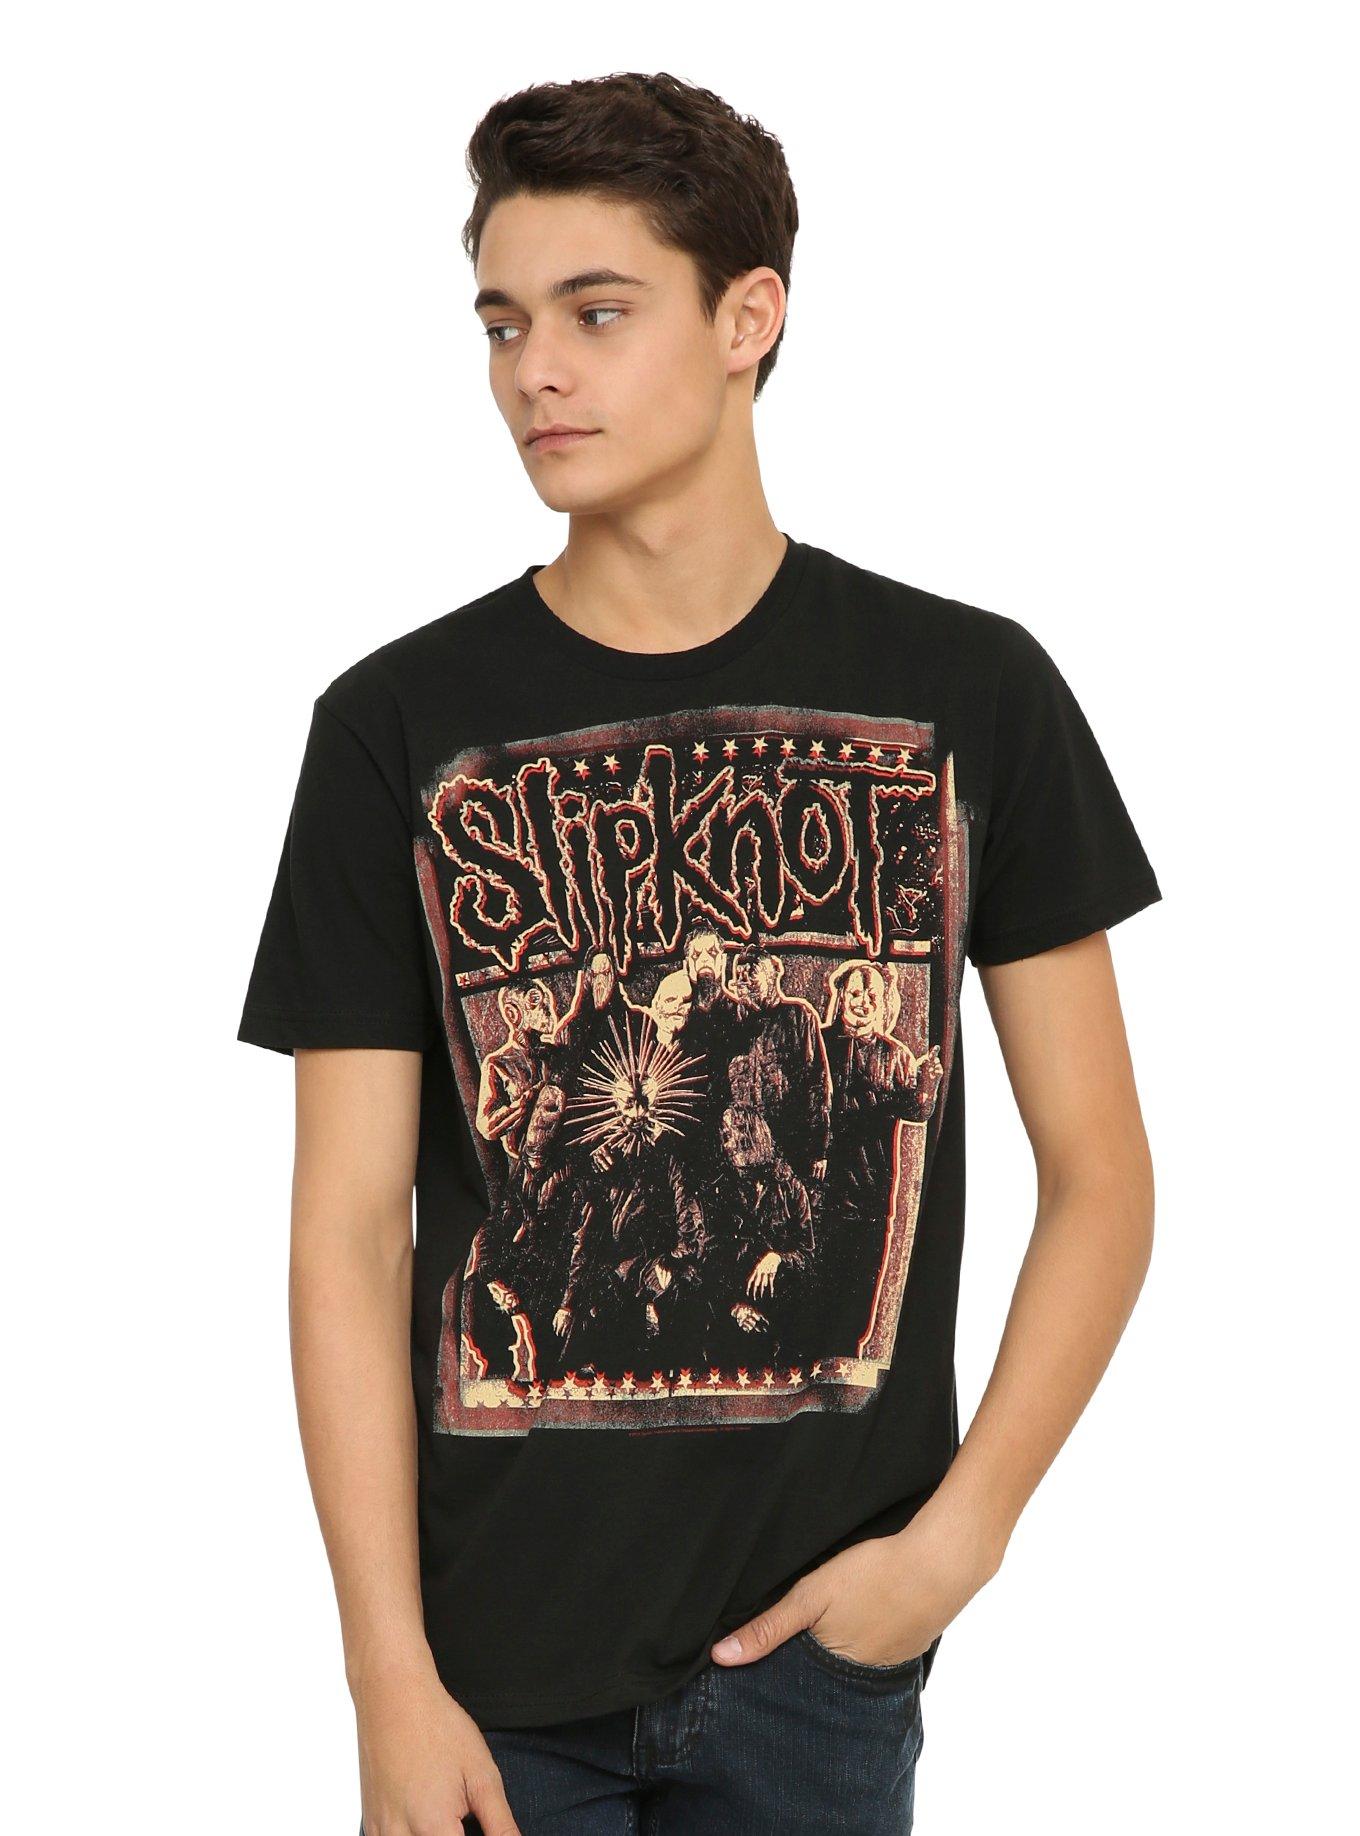 Slipknot Group T-Shirt | Hot Topic